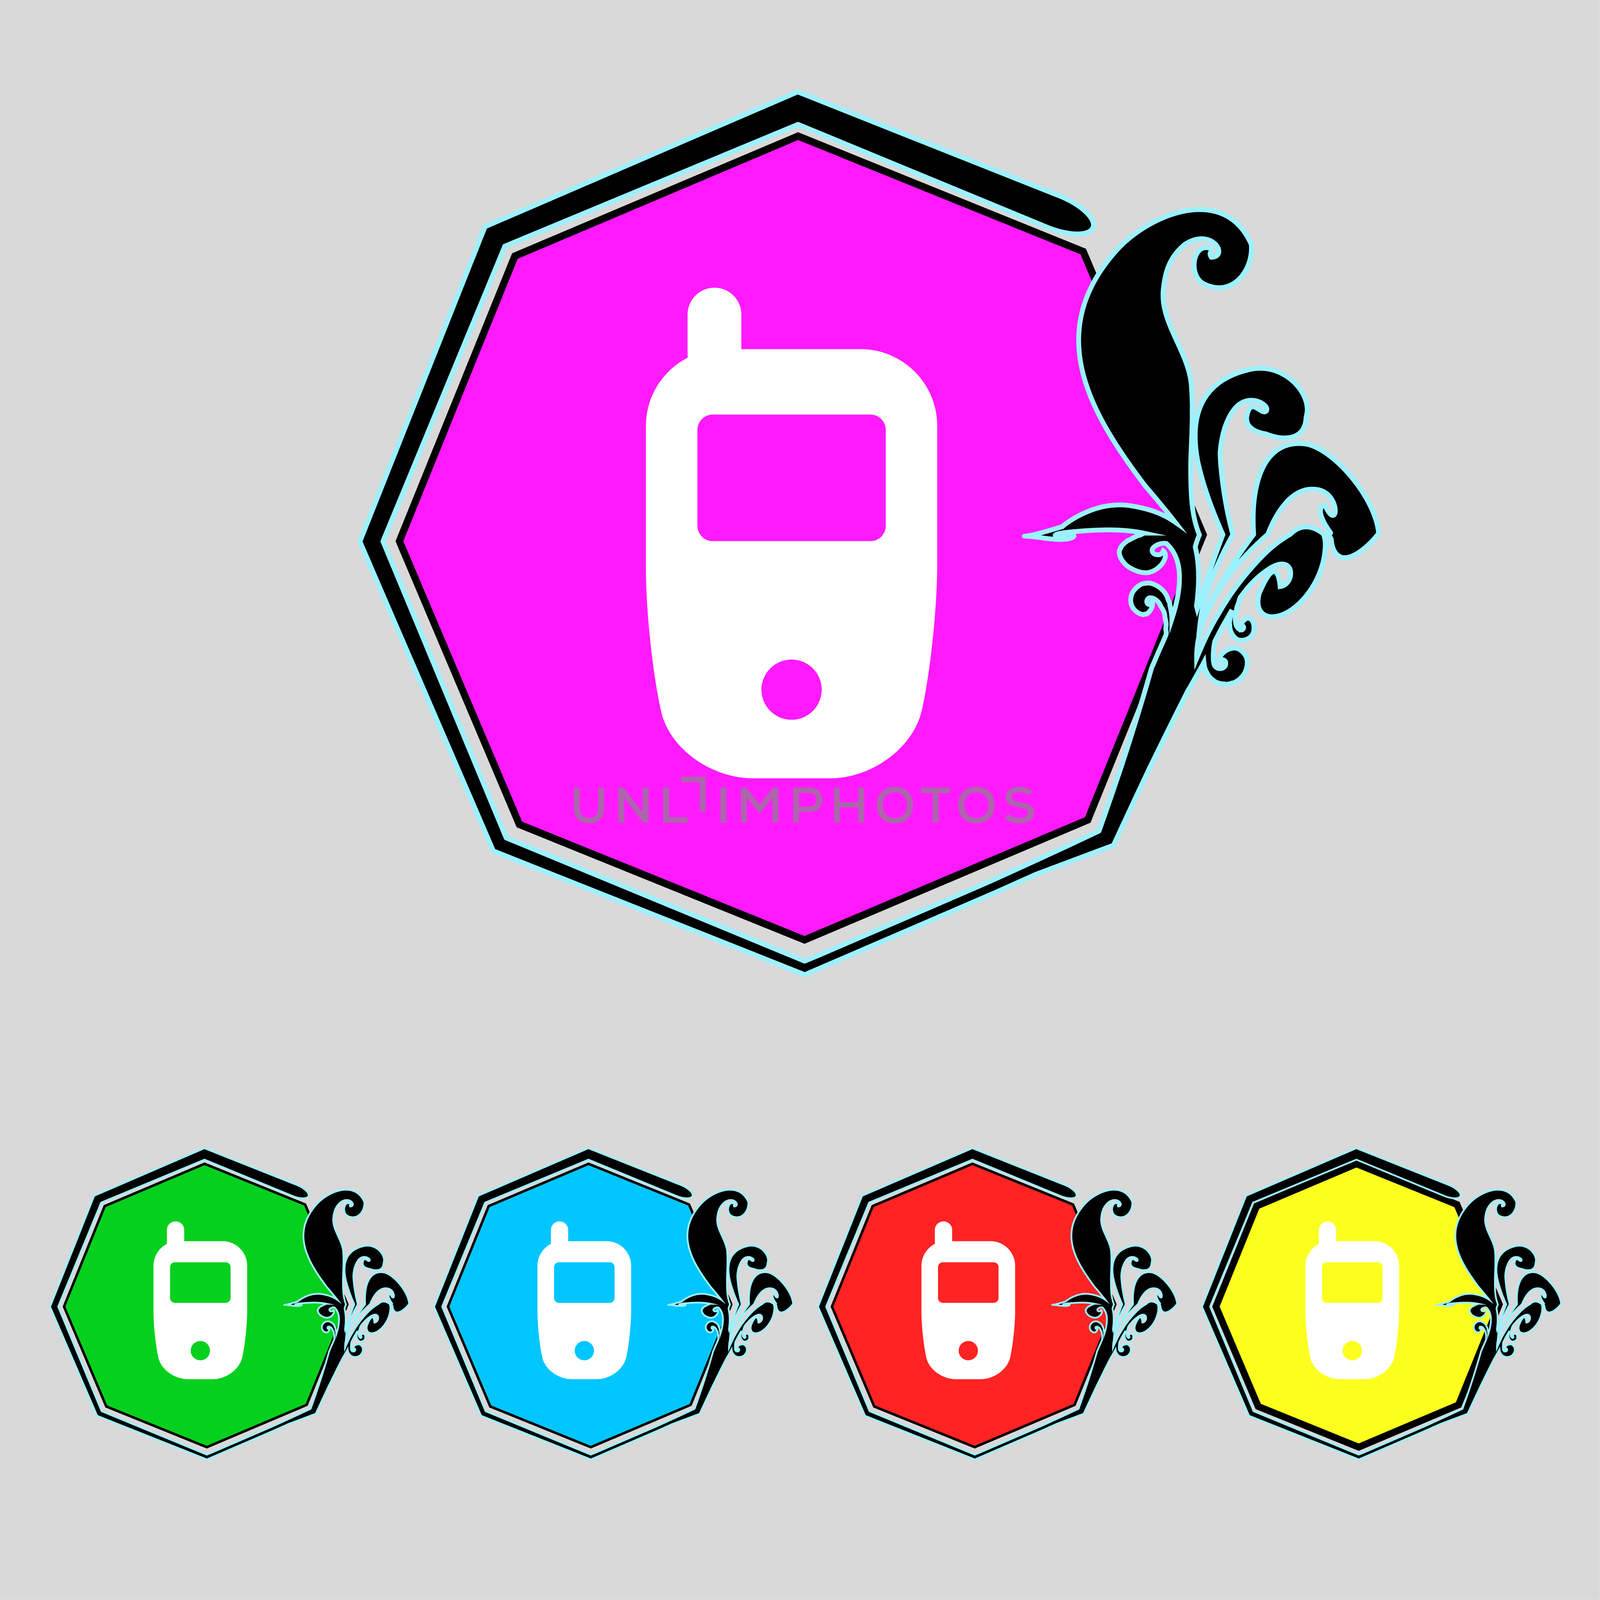 Mobile telecommunications technology symbol. Set colour buttons. illustration